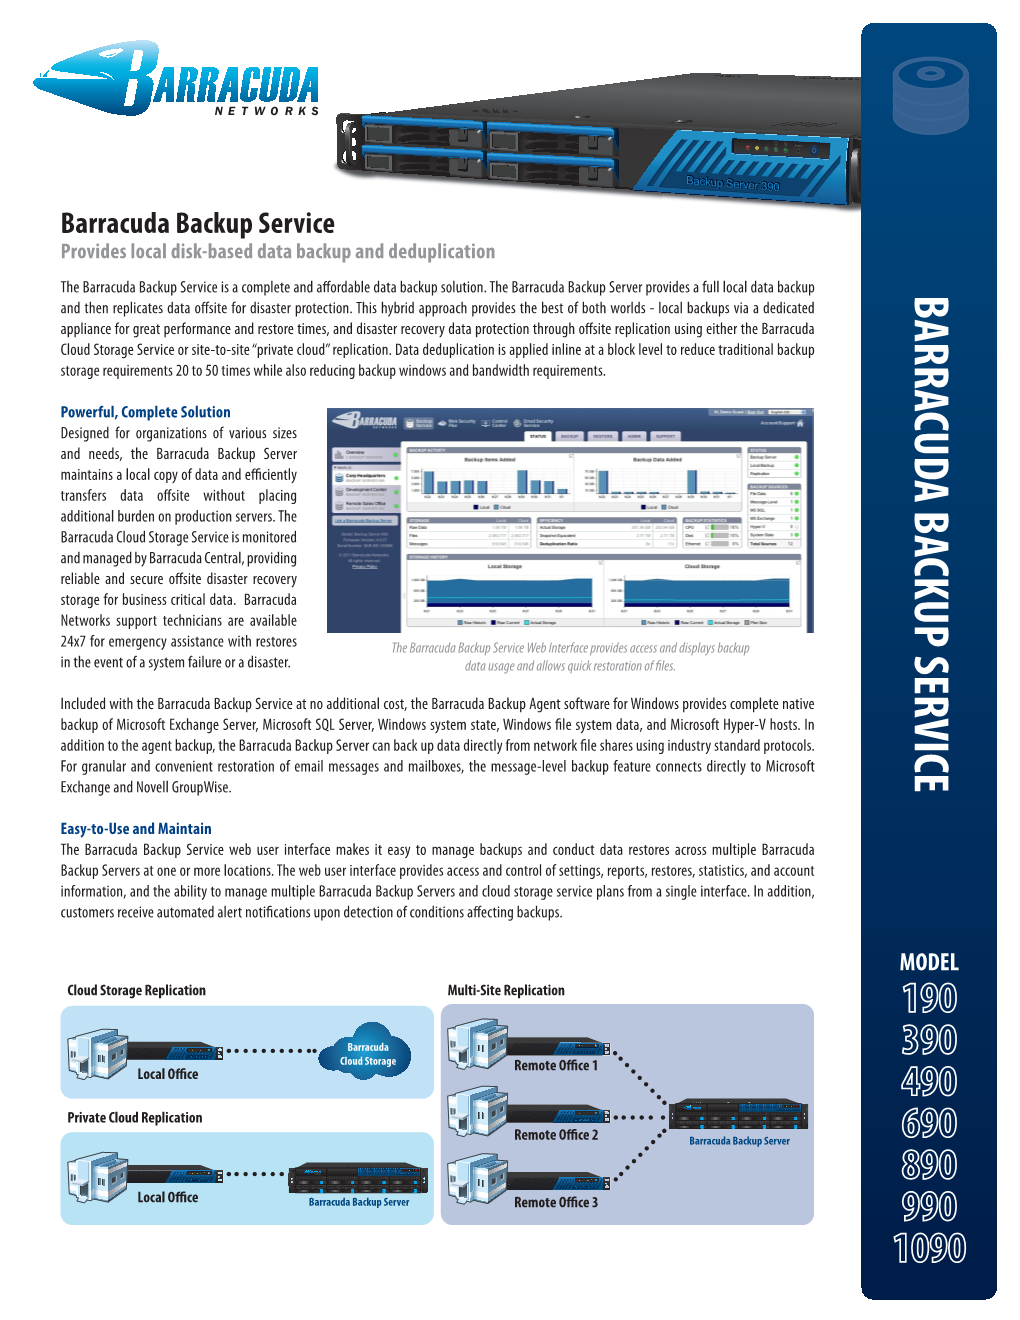 Barracuda Backup Service Provides Local Disk-Based Data Backup and Deduplication